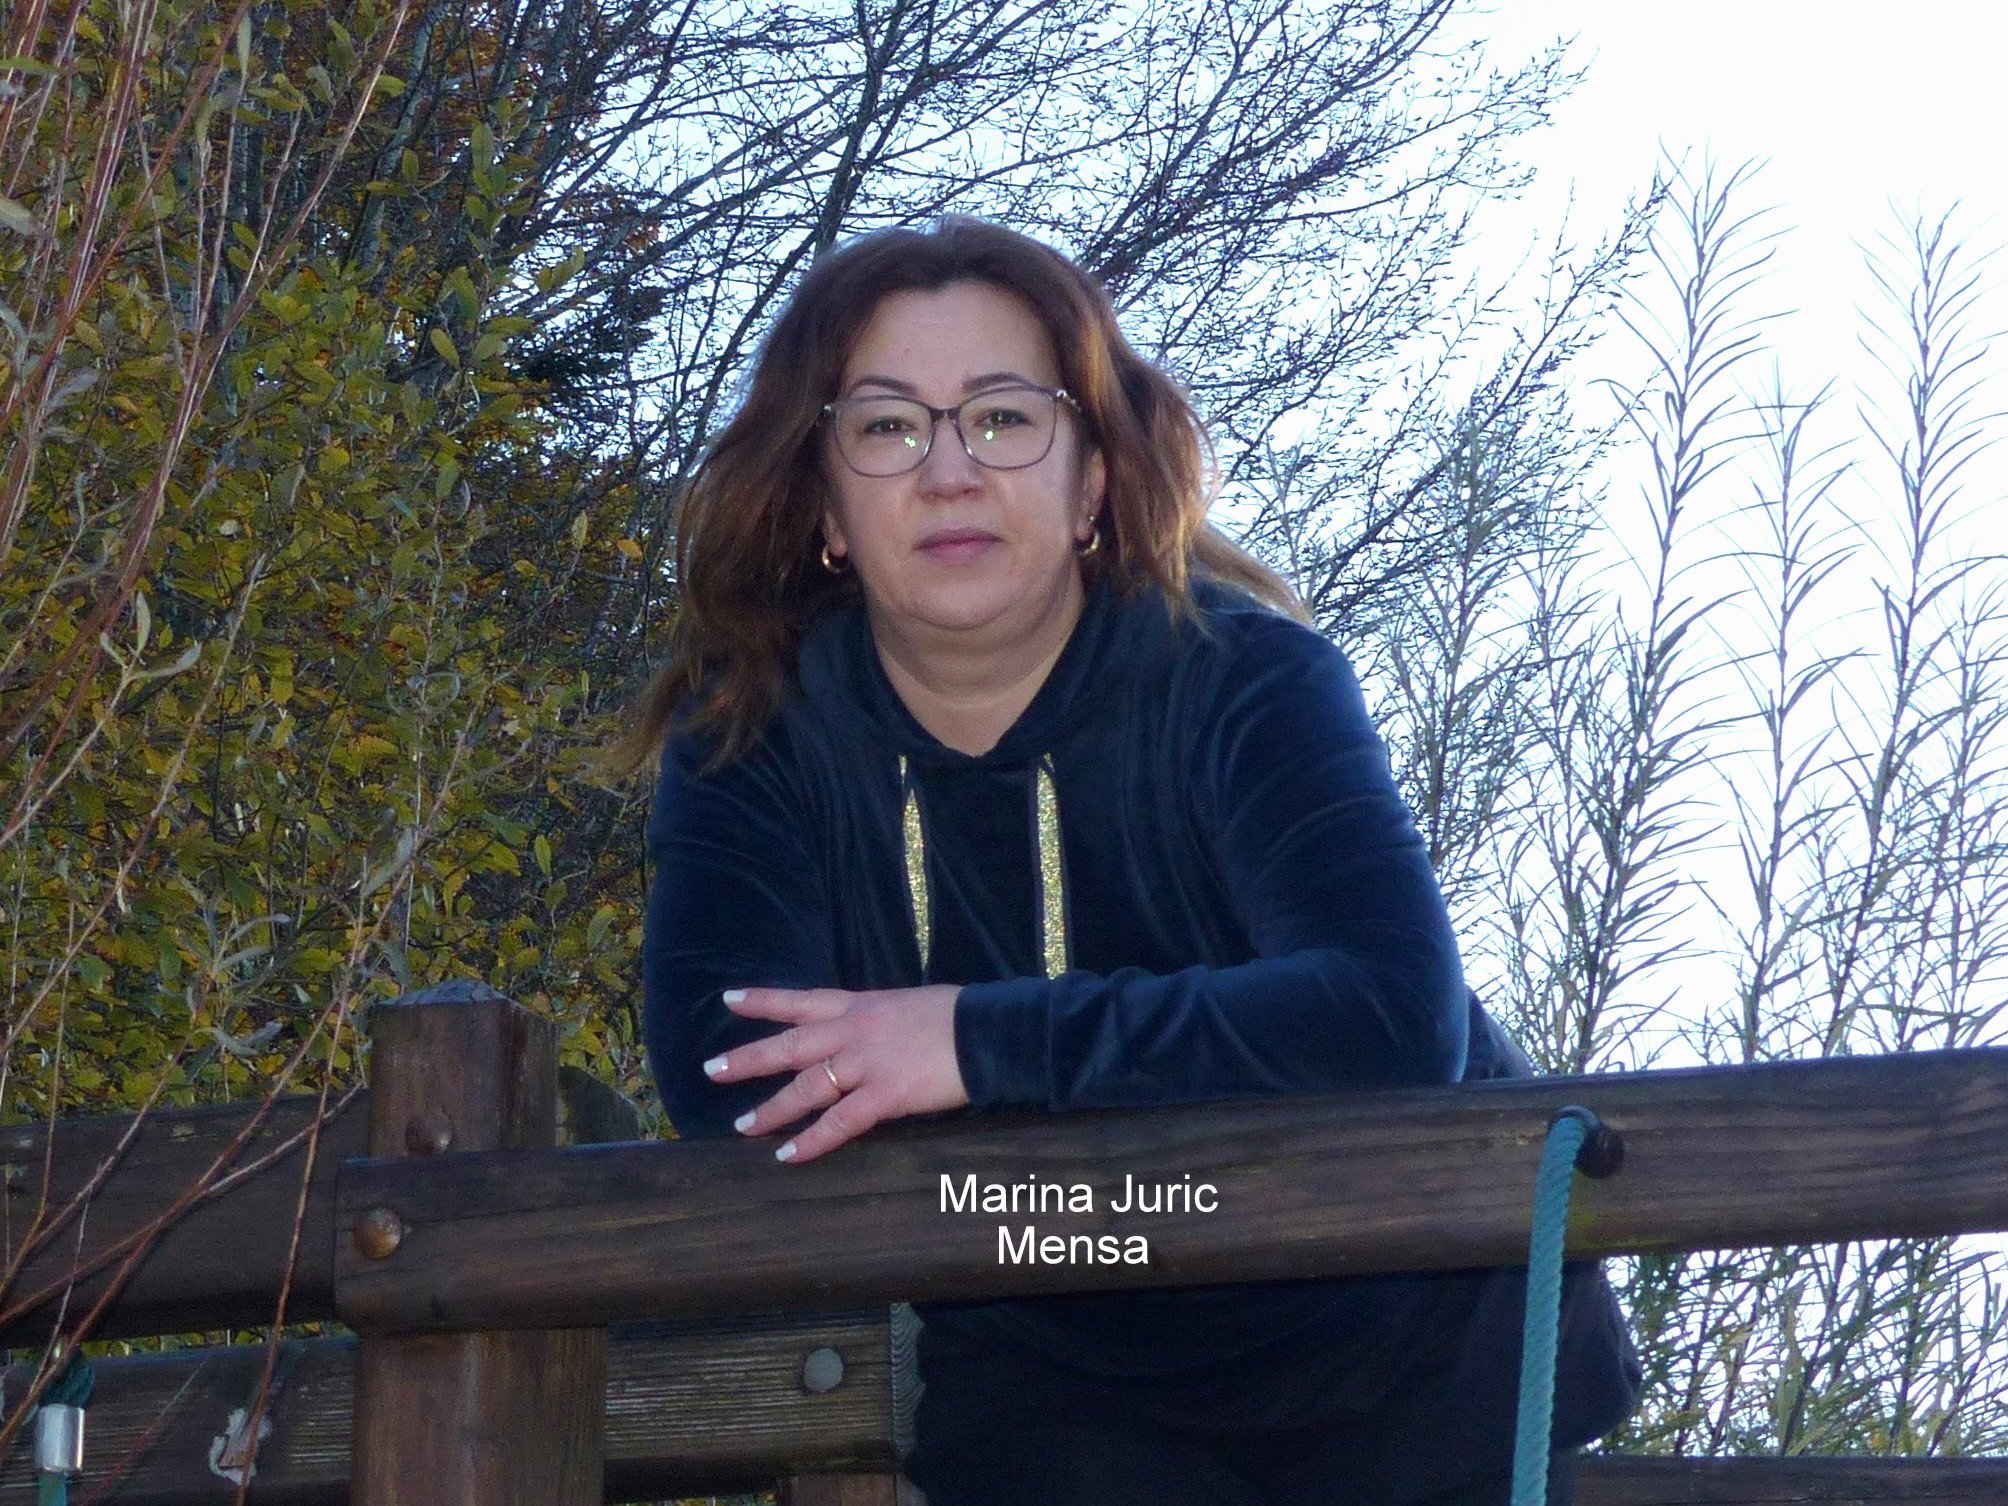 Marina Juric